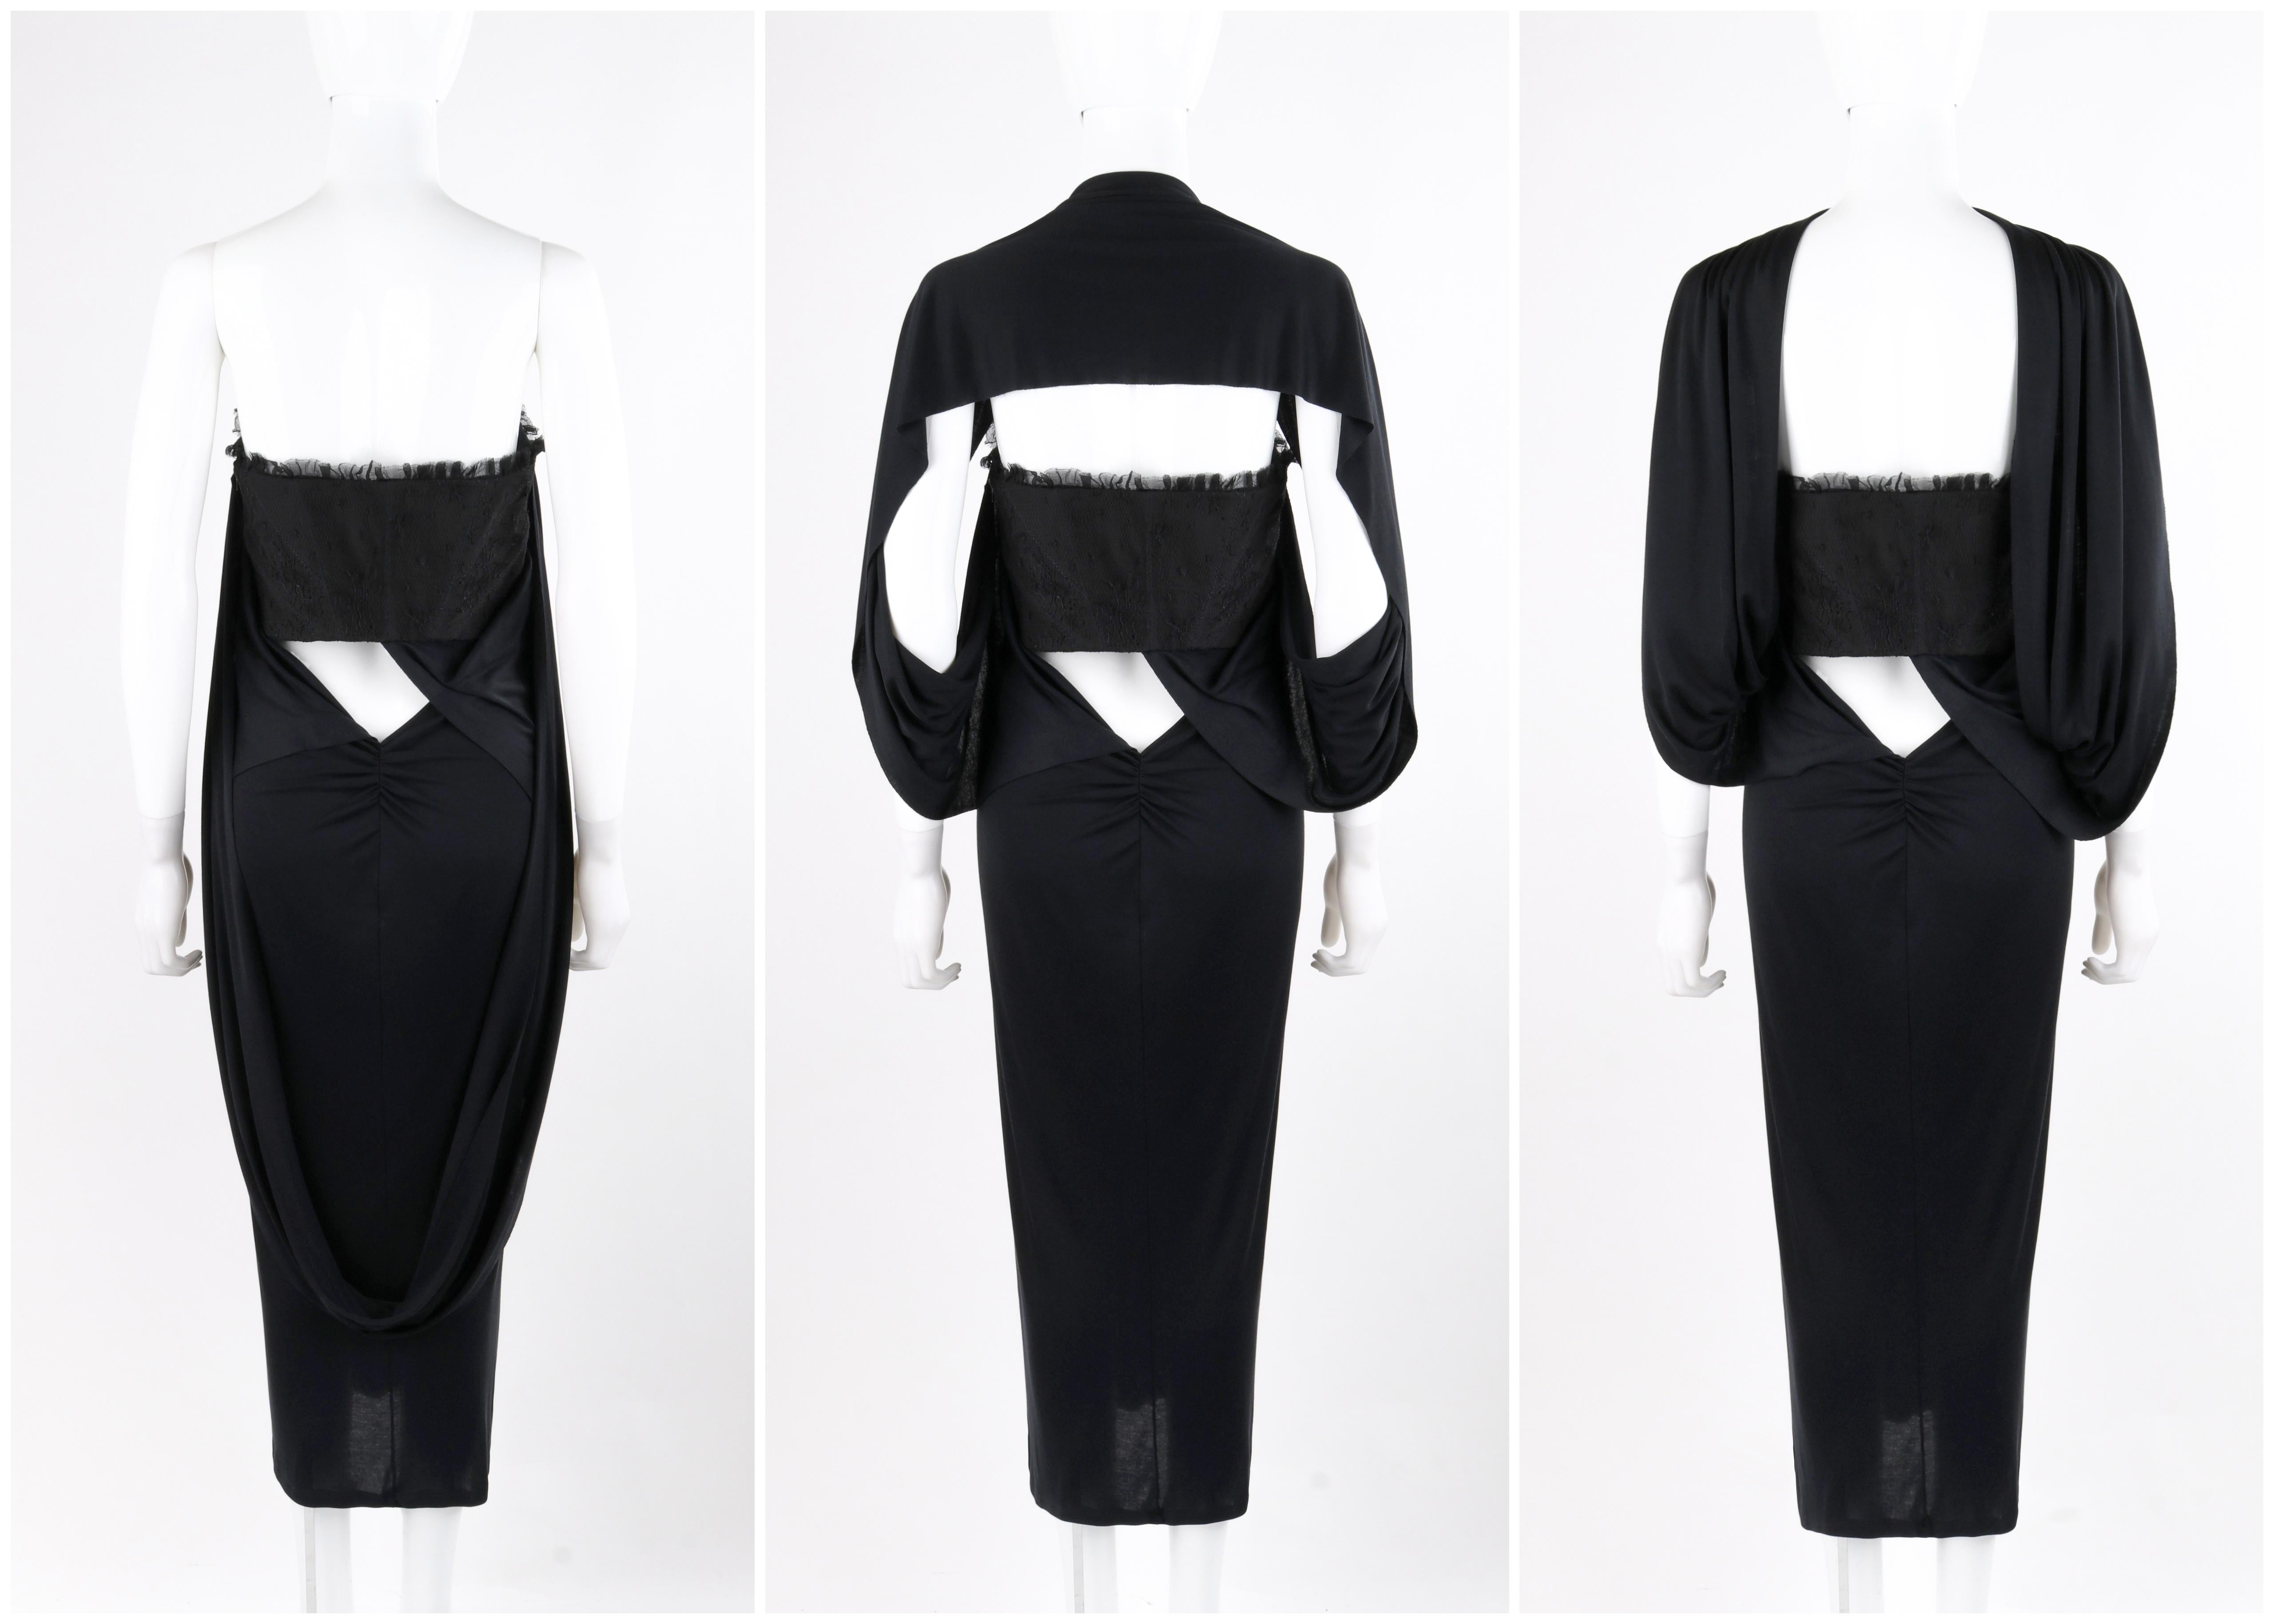 ALEXANDER McQUEEN S/S 2004 Black Multiway Bustier Midi Length Evening Dress  For Sale 1